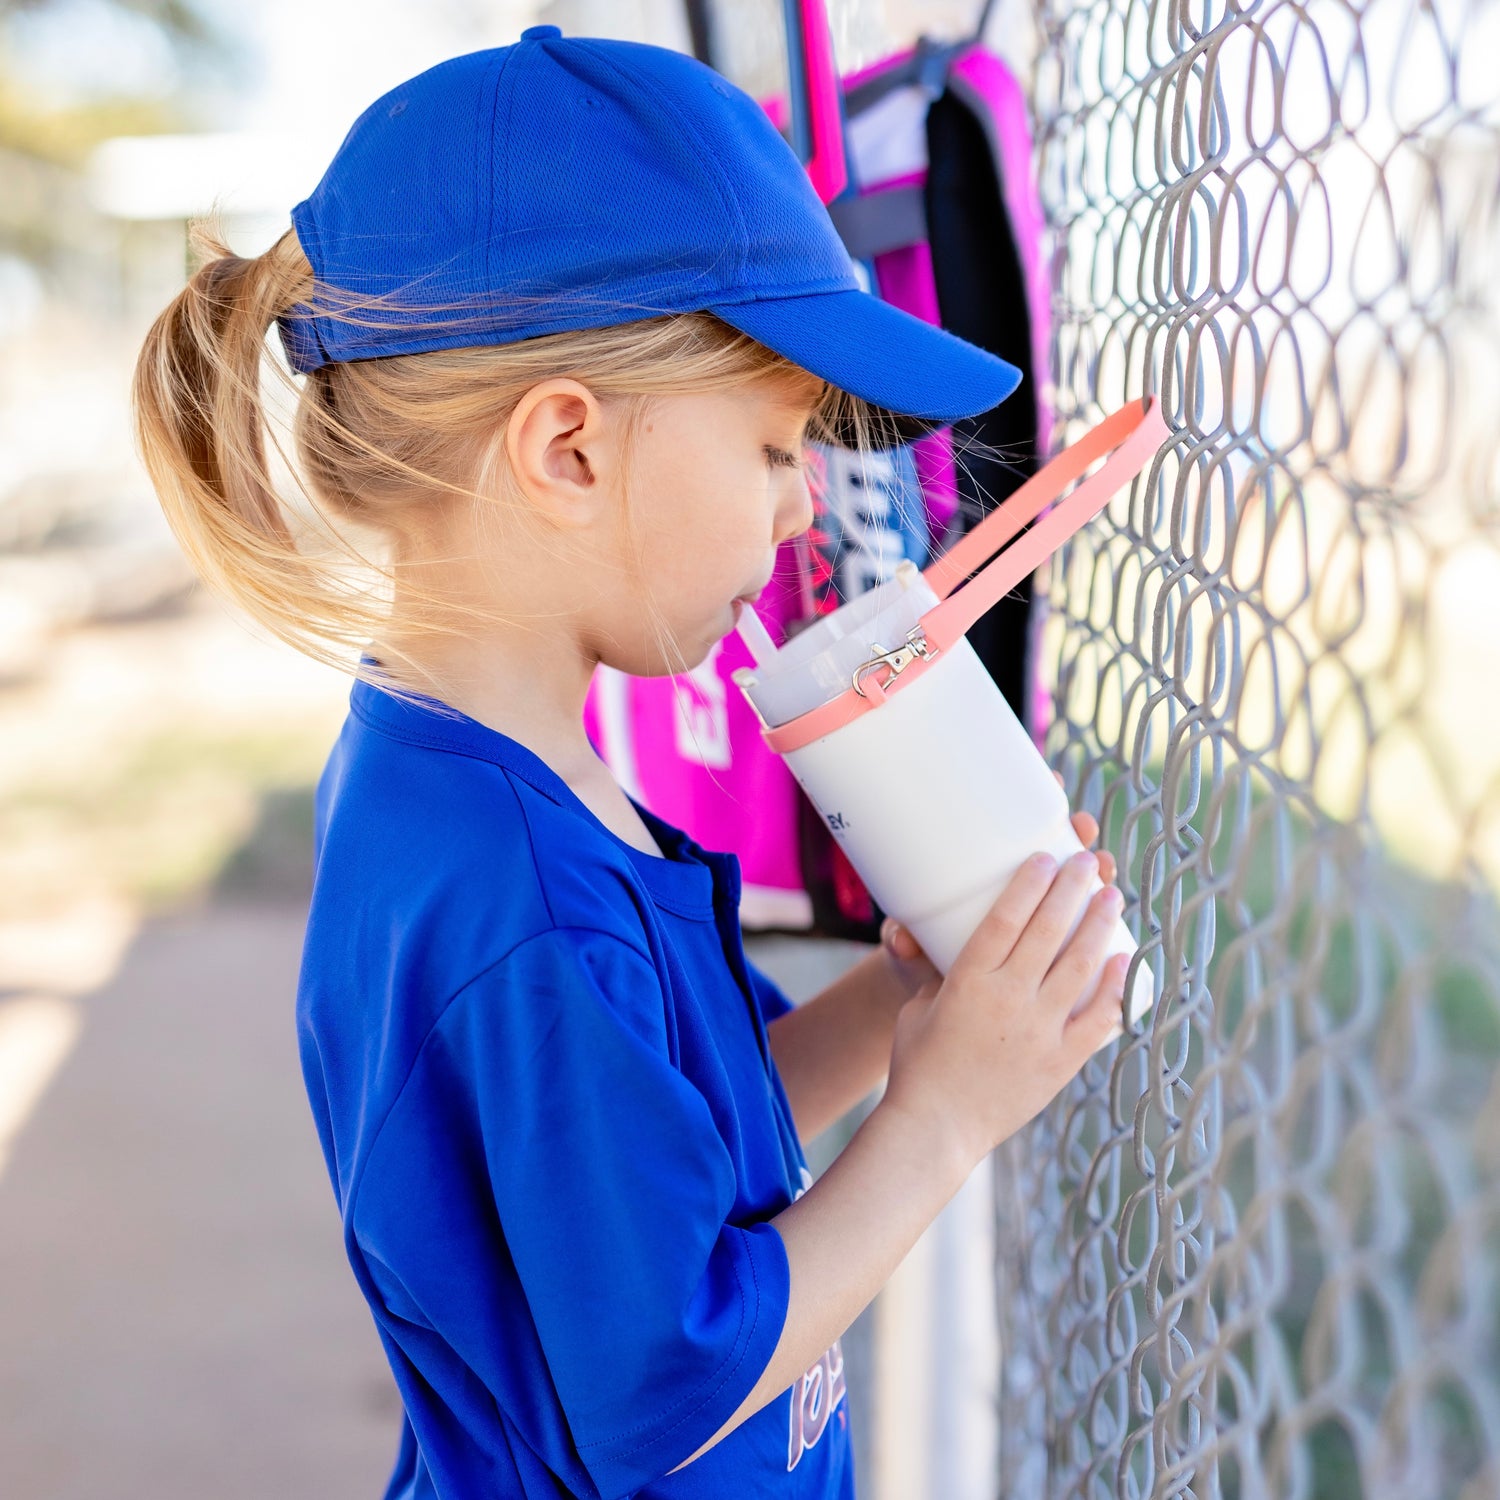 Girl drinking water on the baseball field.